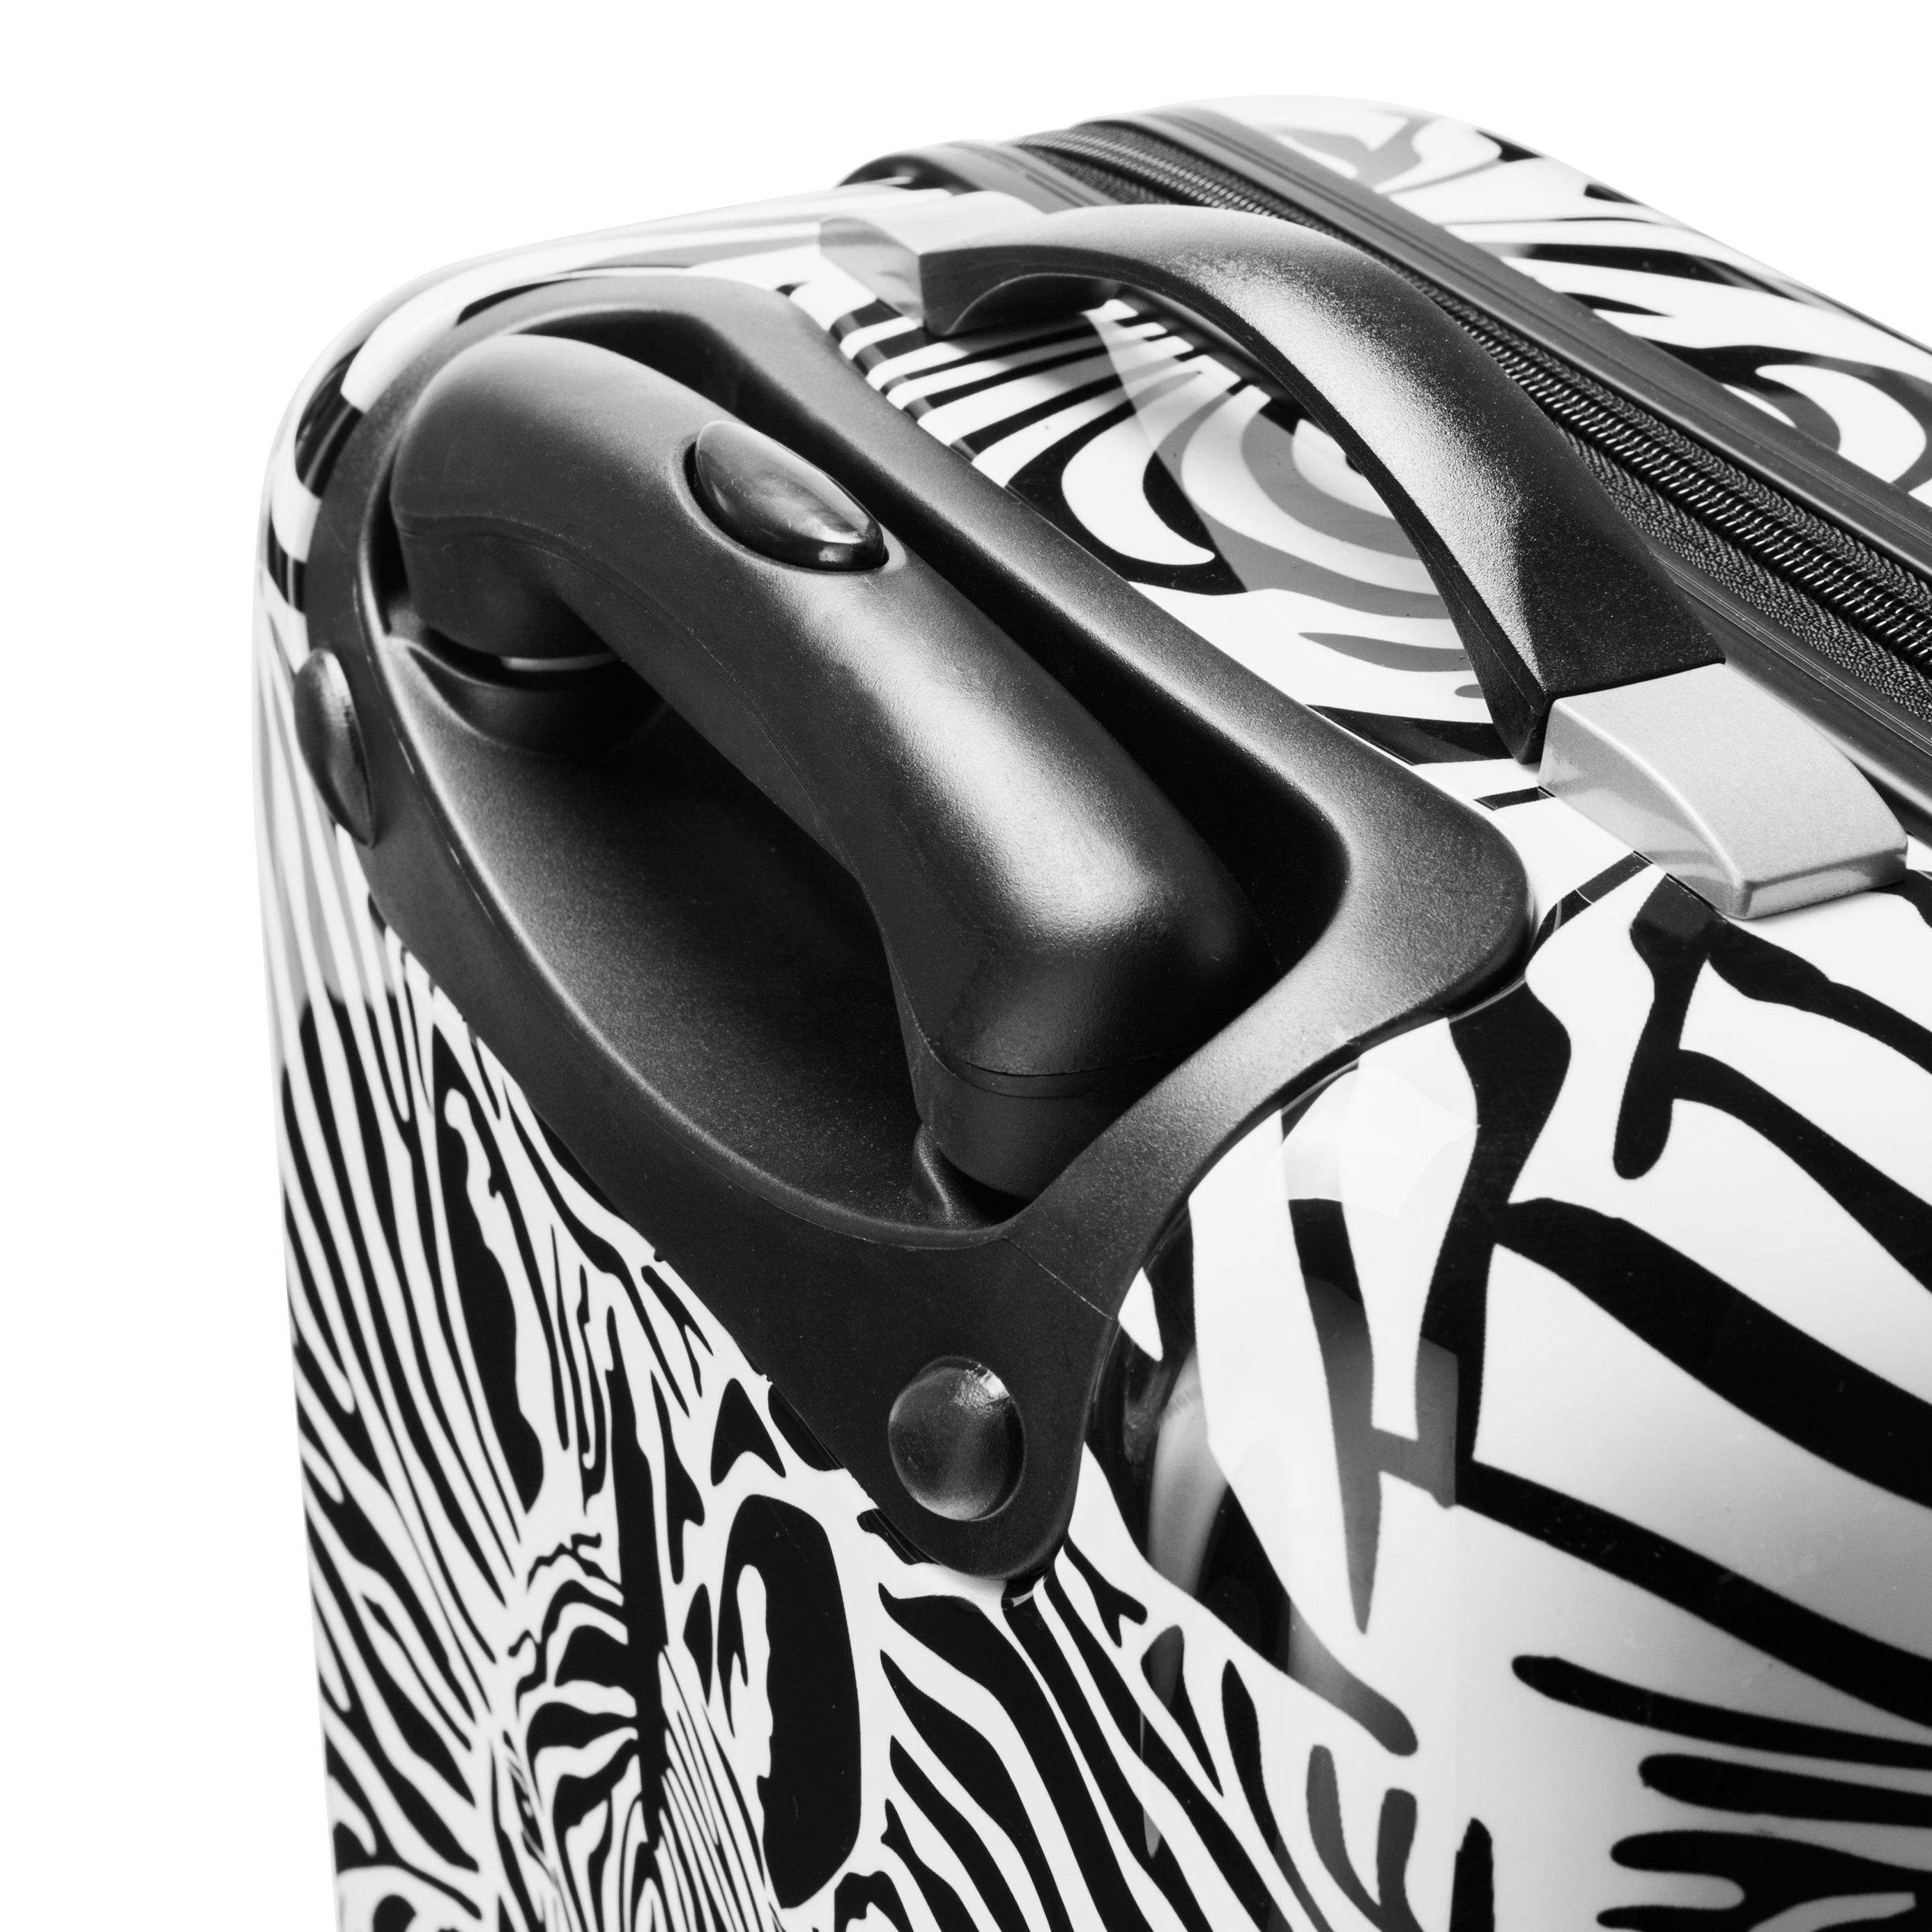 Kofferset Wildlife Zebra, 3-tlg. jetzt bei Weltbild.de bestellen